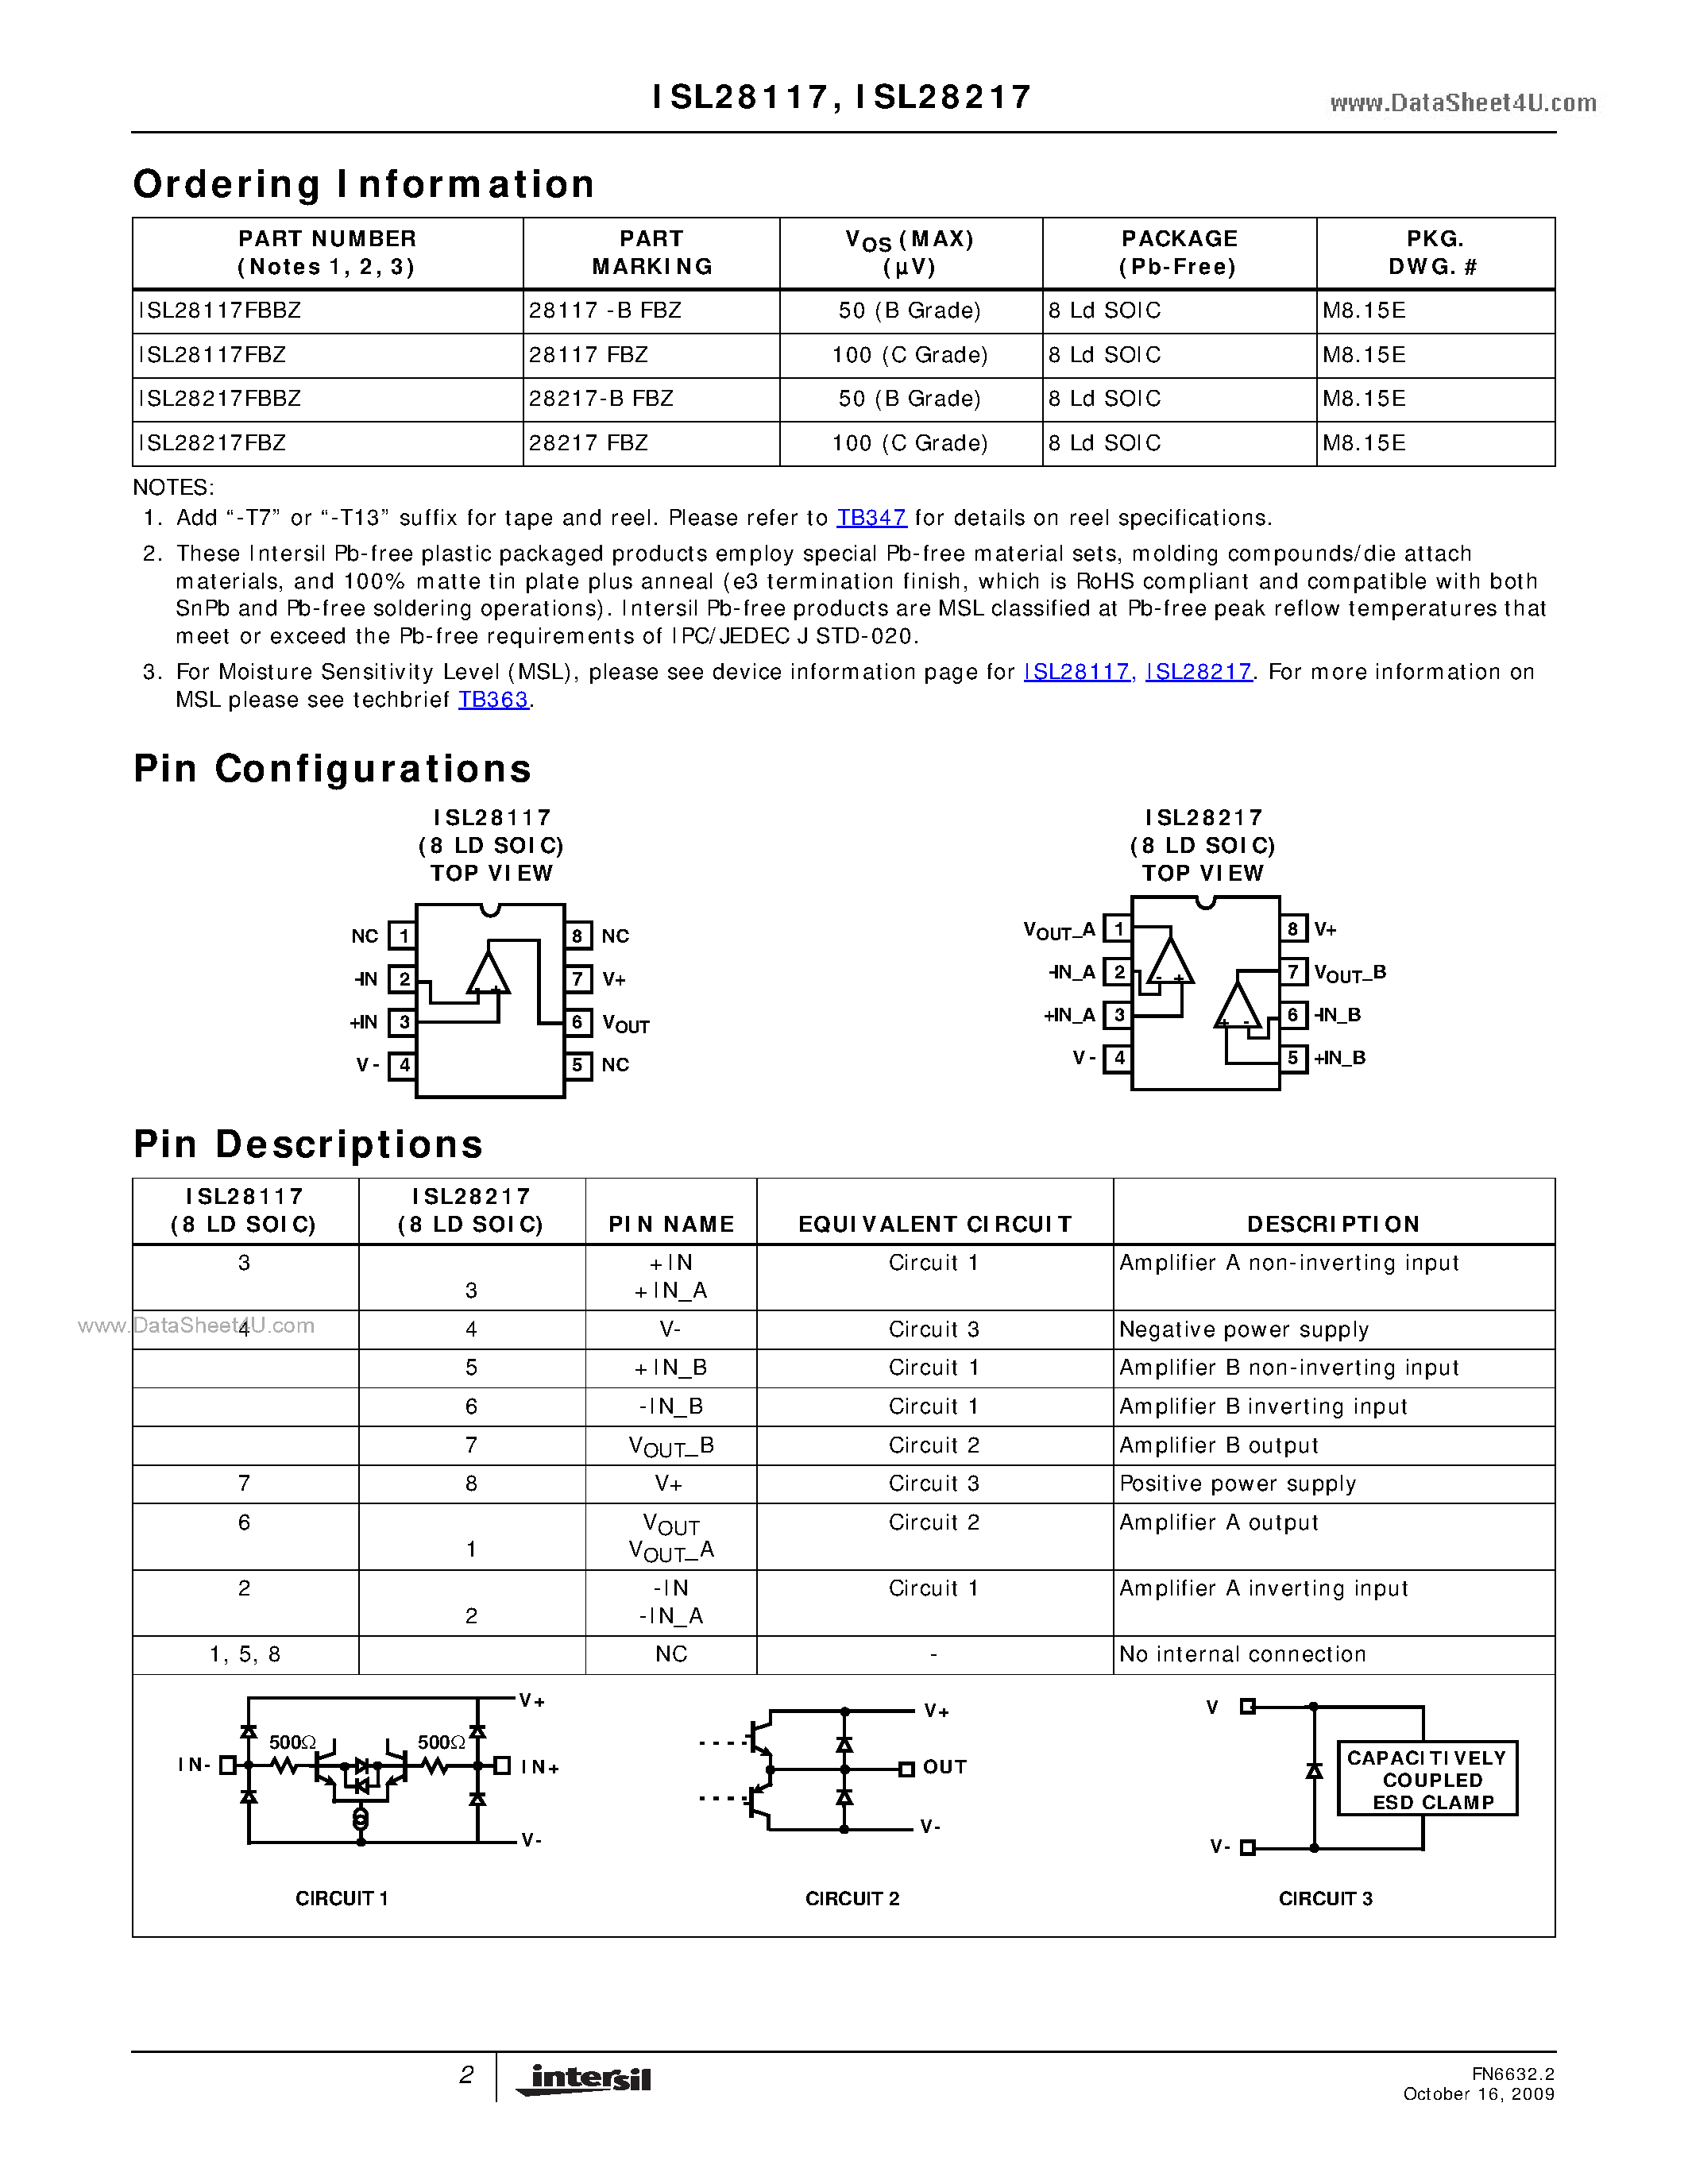 Даташит ISL28217 - (ISL28217 / ISL28227) 40V Precision Low Power Operational Amplifiers страница 2